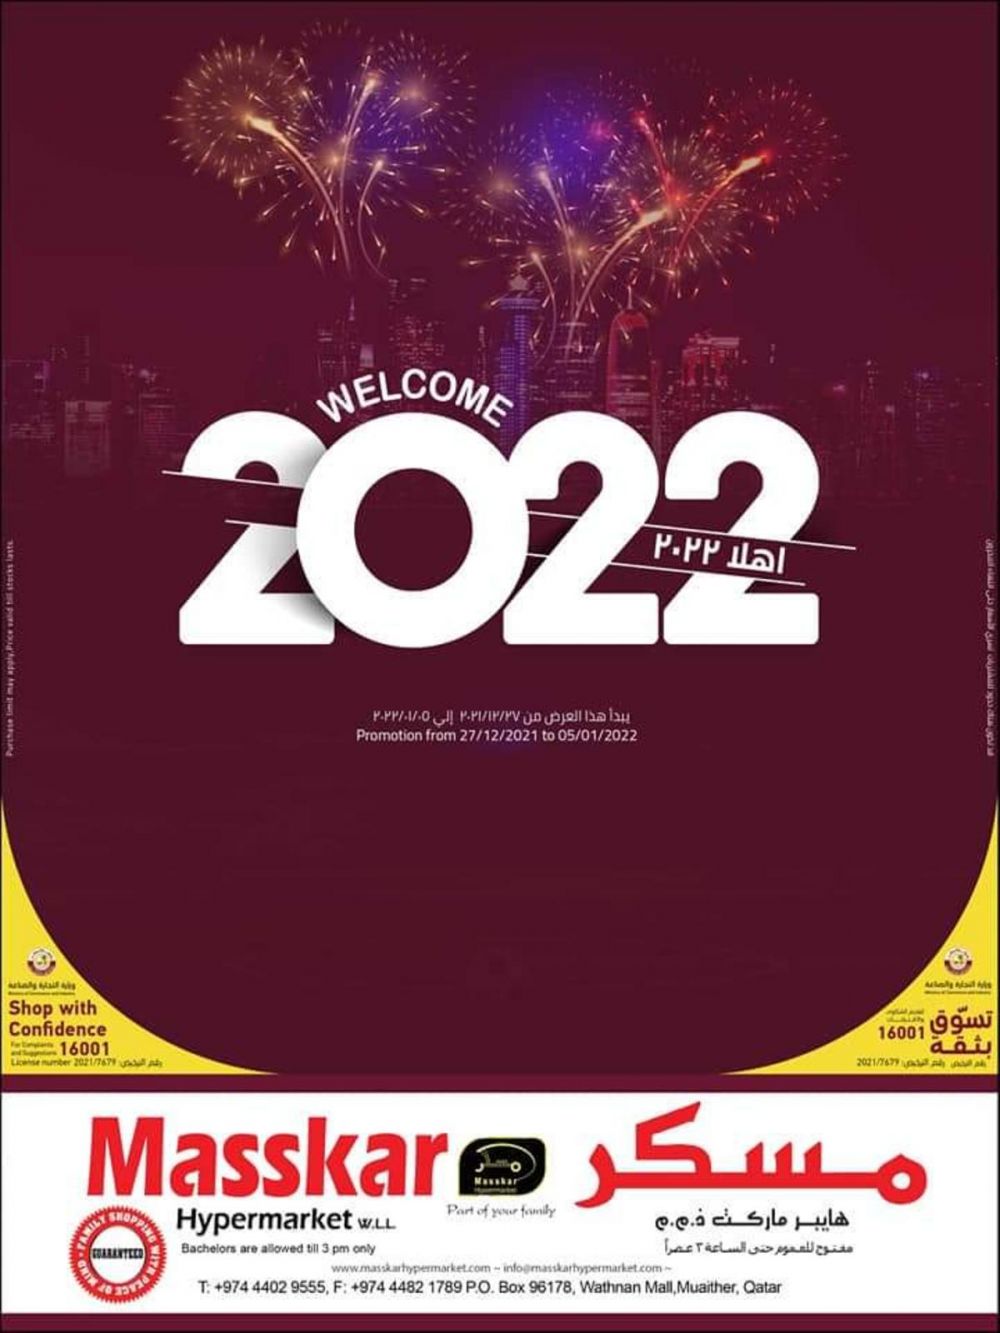 Masskar Hypermarket Qatar offers 2021